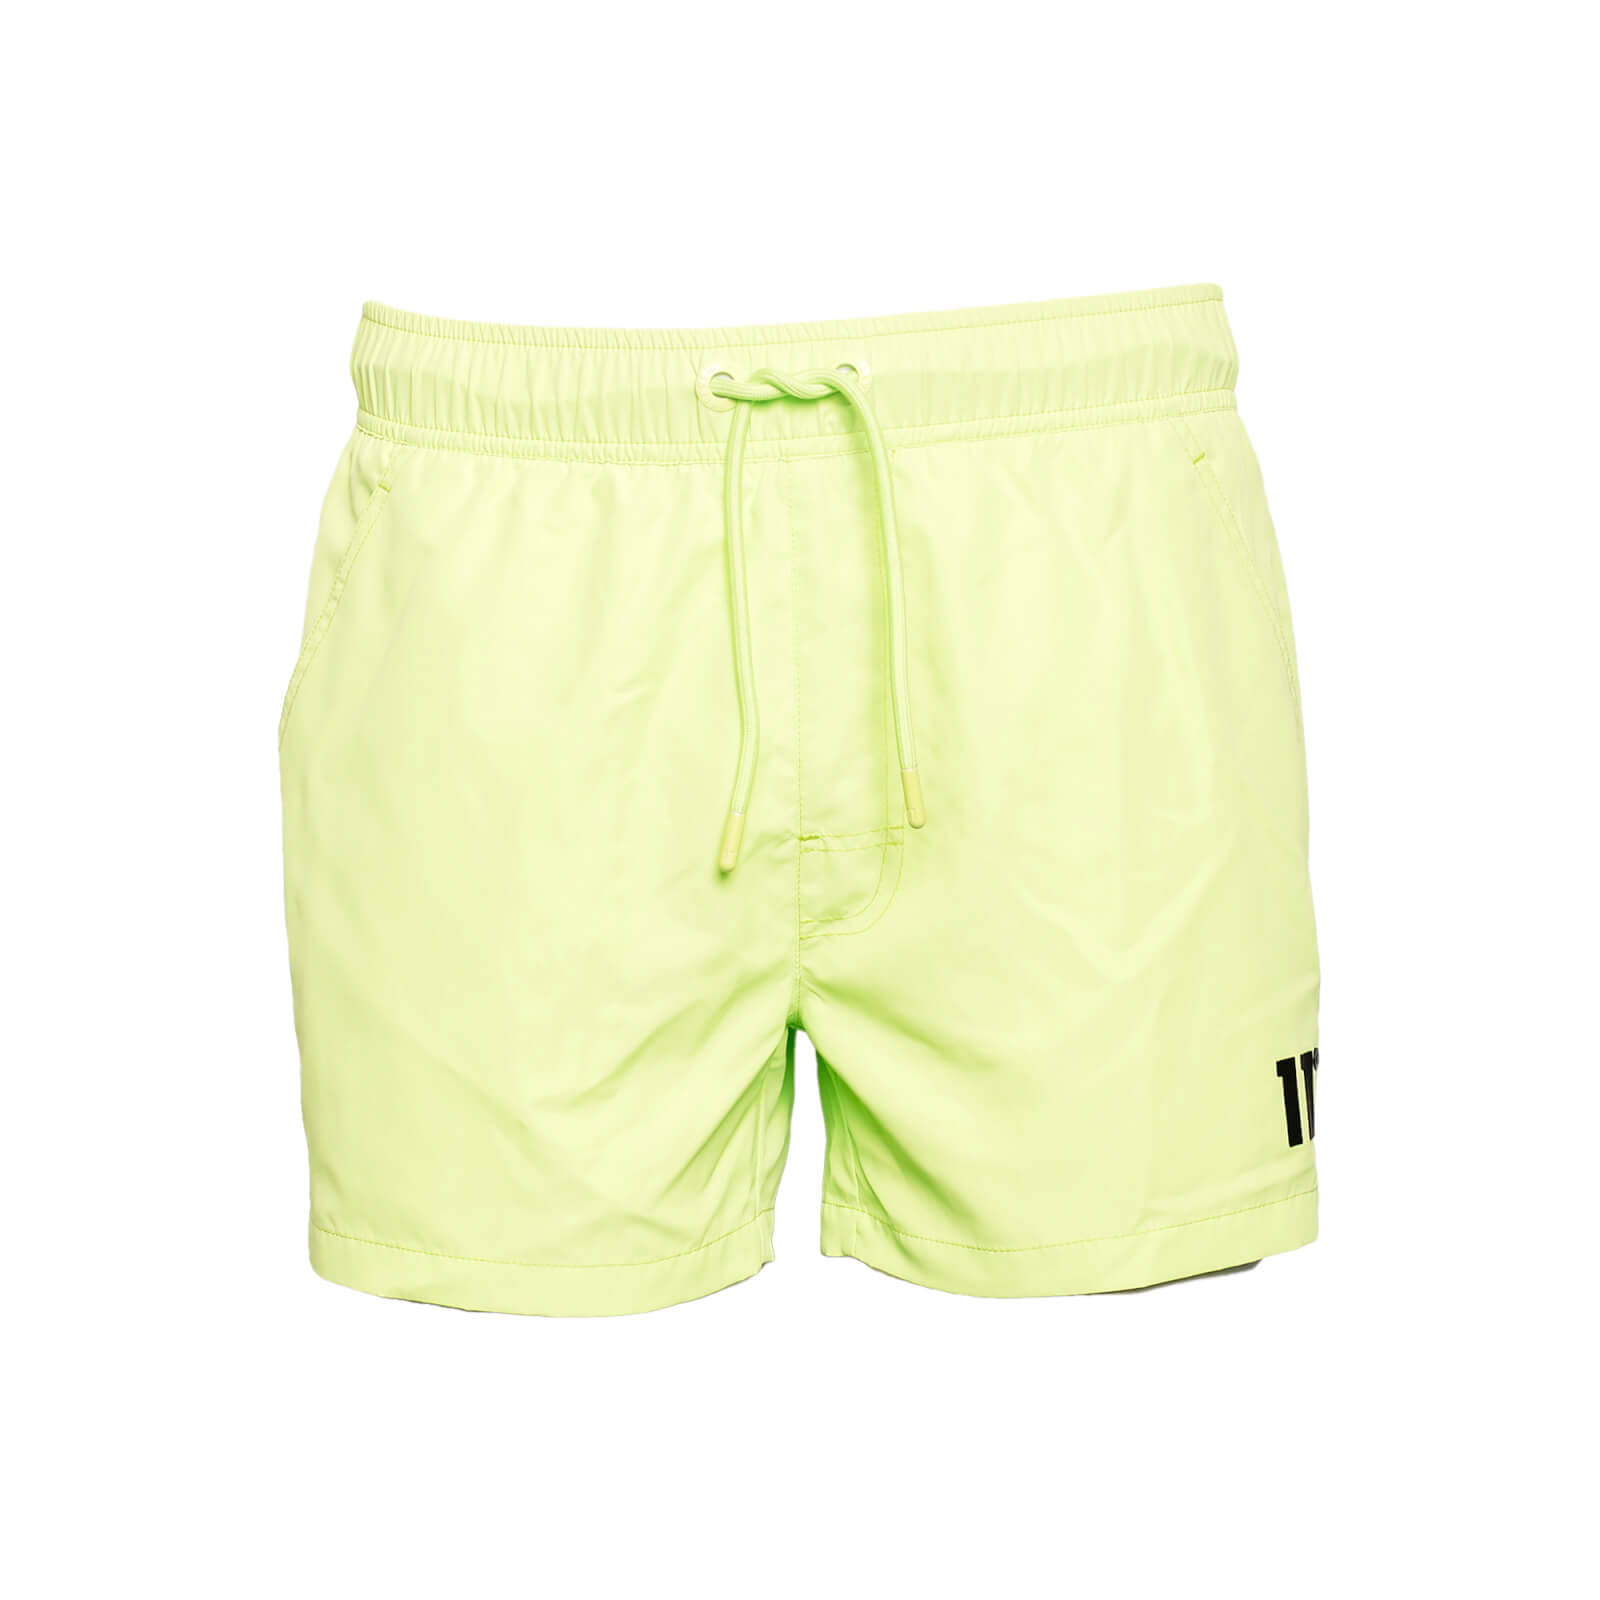 core swim shorts – sharp green - s